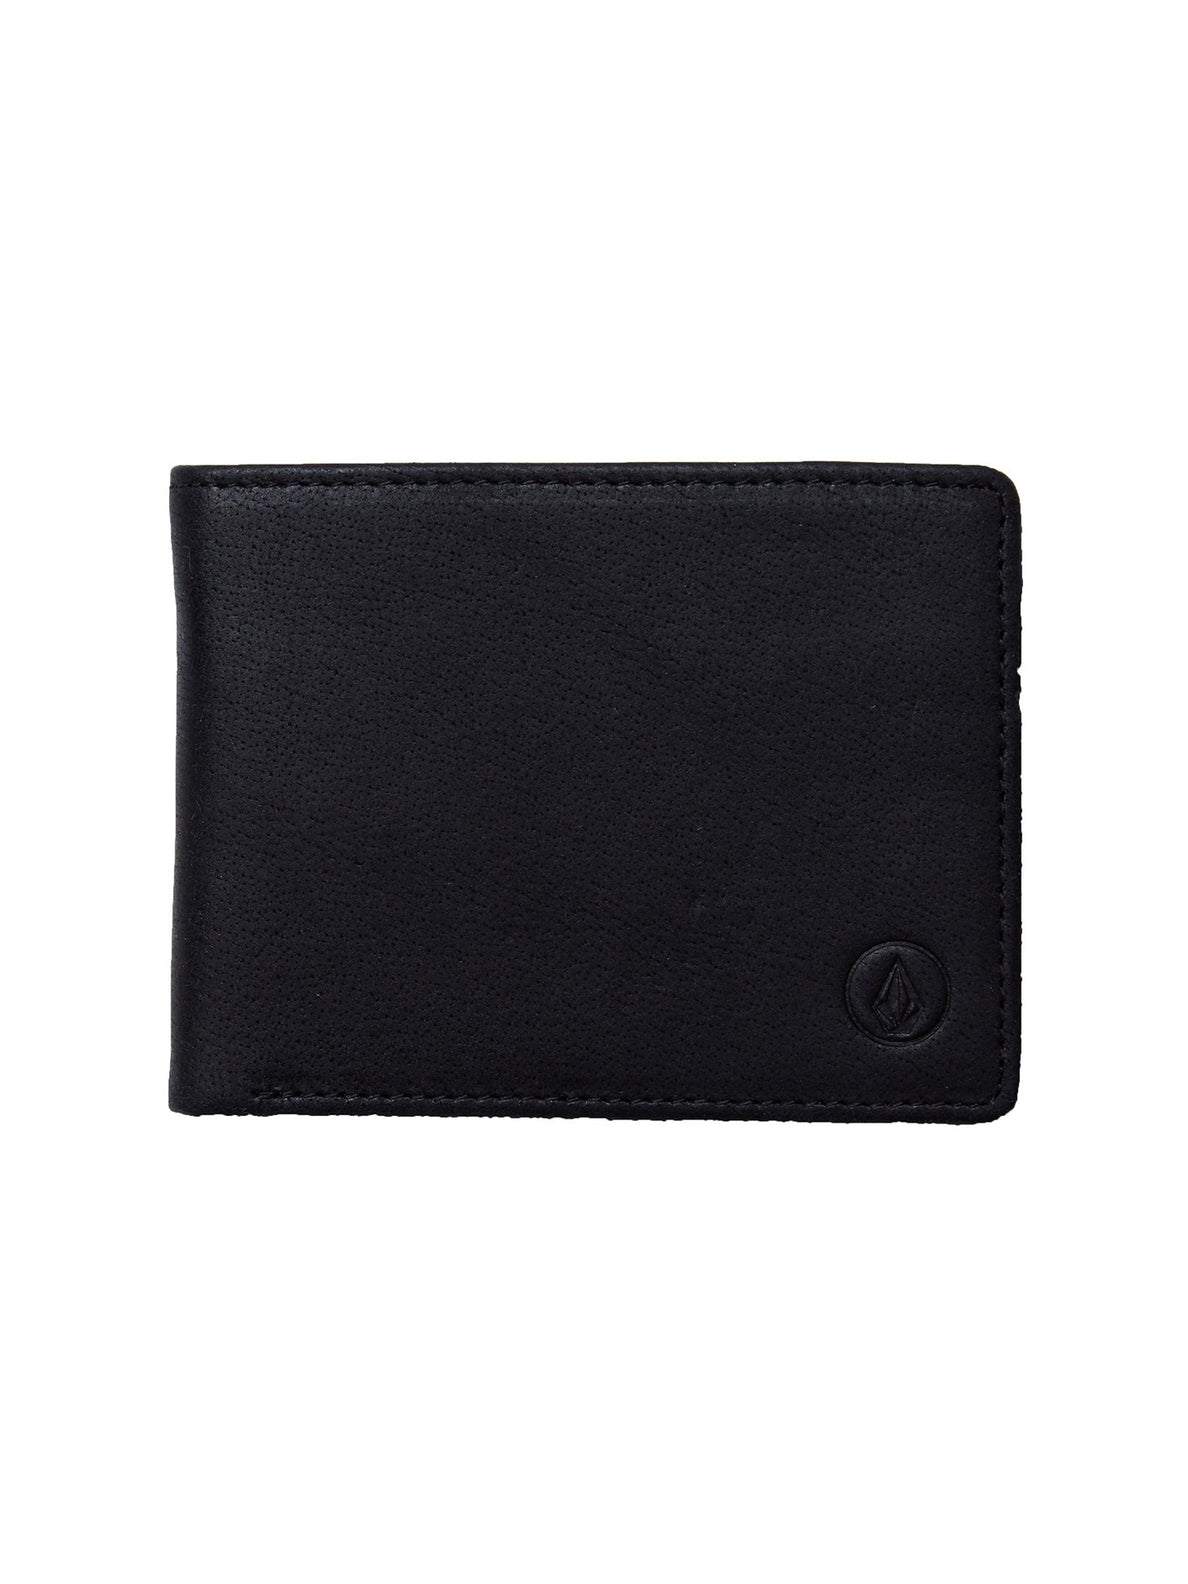 Portemonnaie Volcom Leather - Black